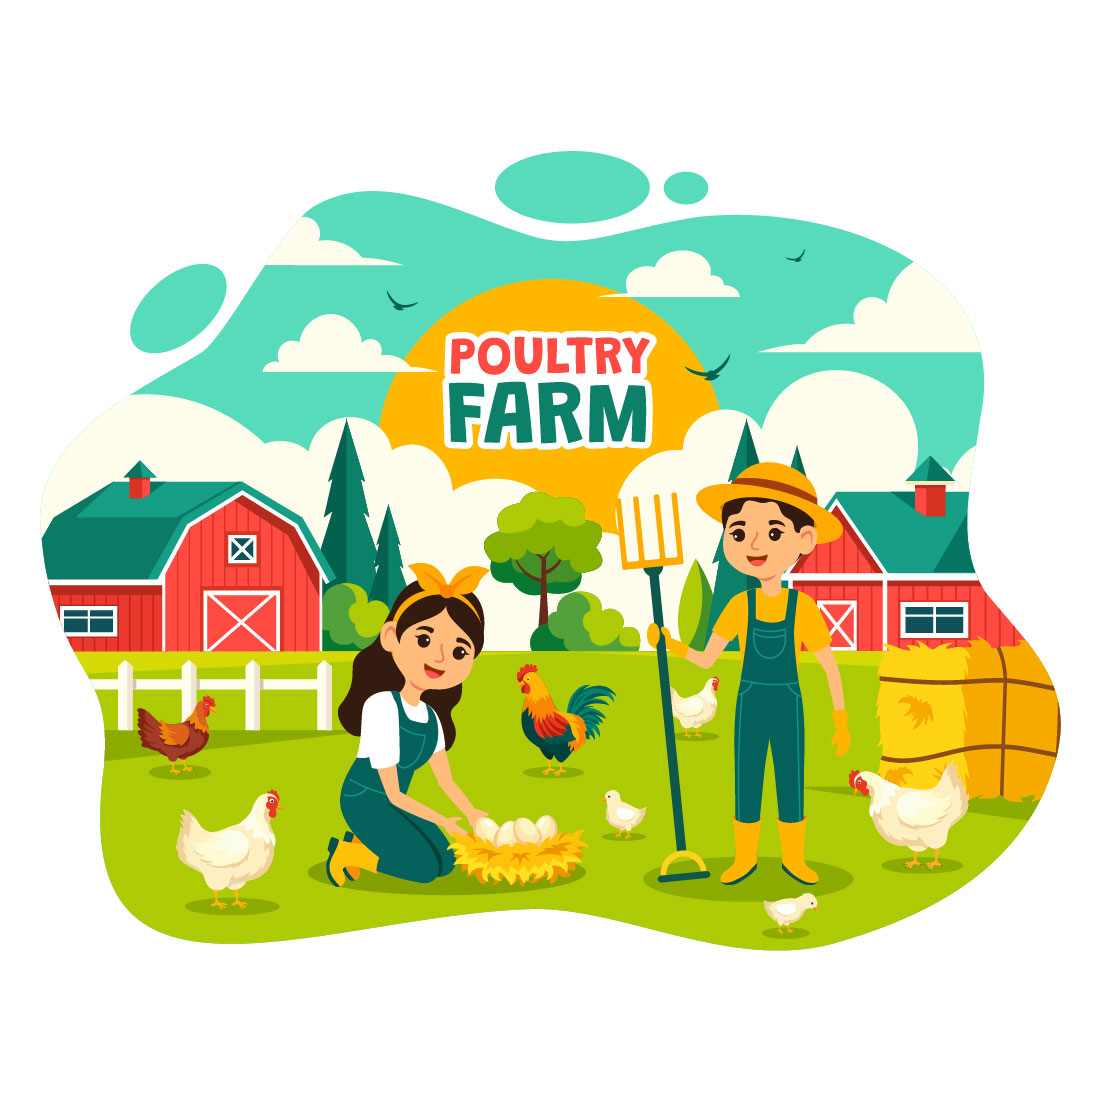 12 Poultry Farm Illustration cover image.